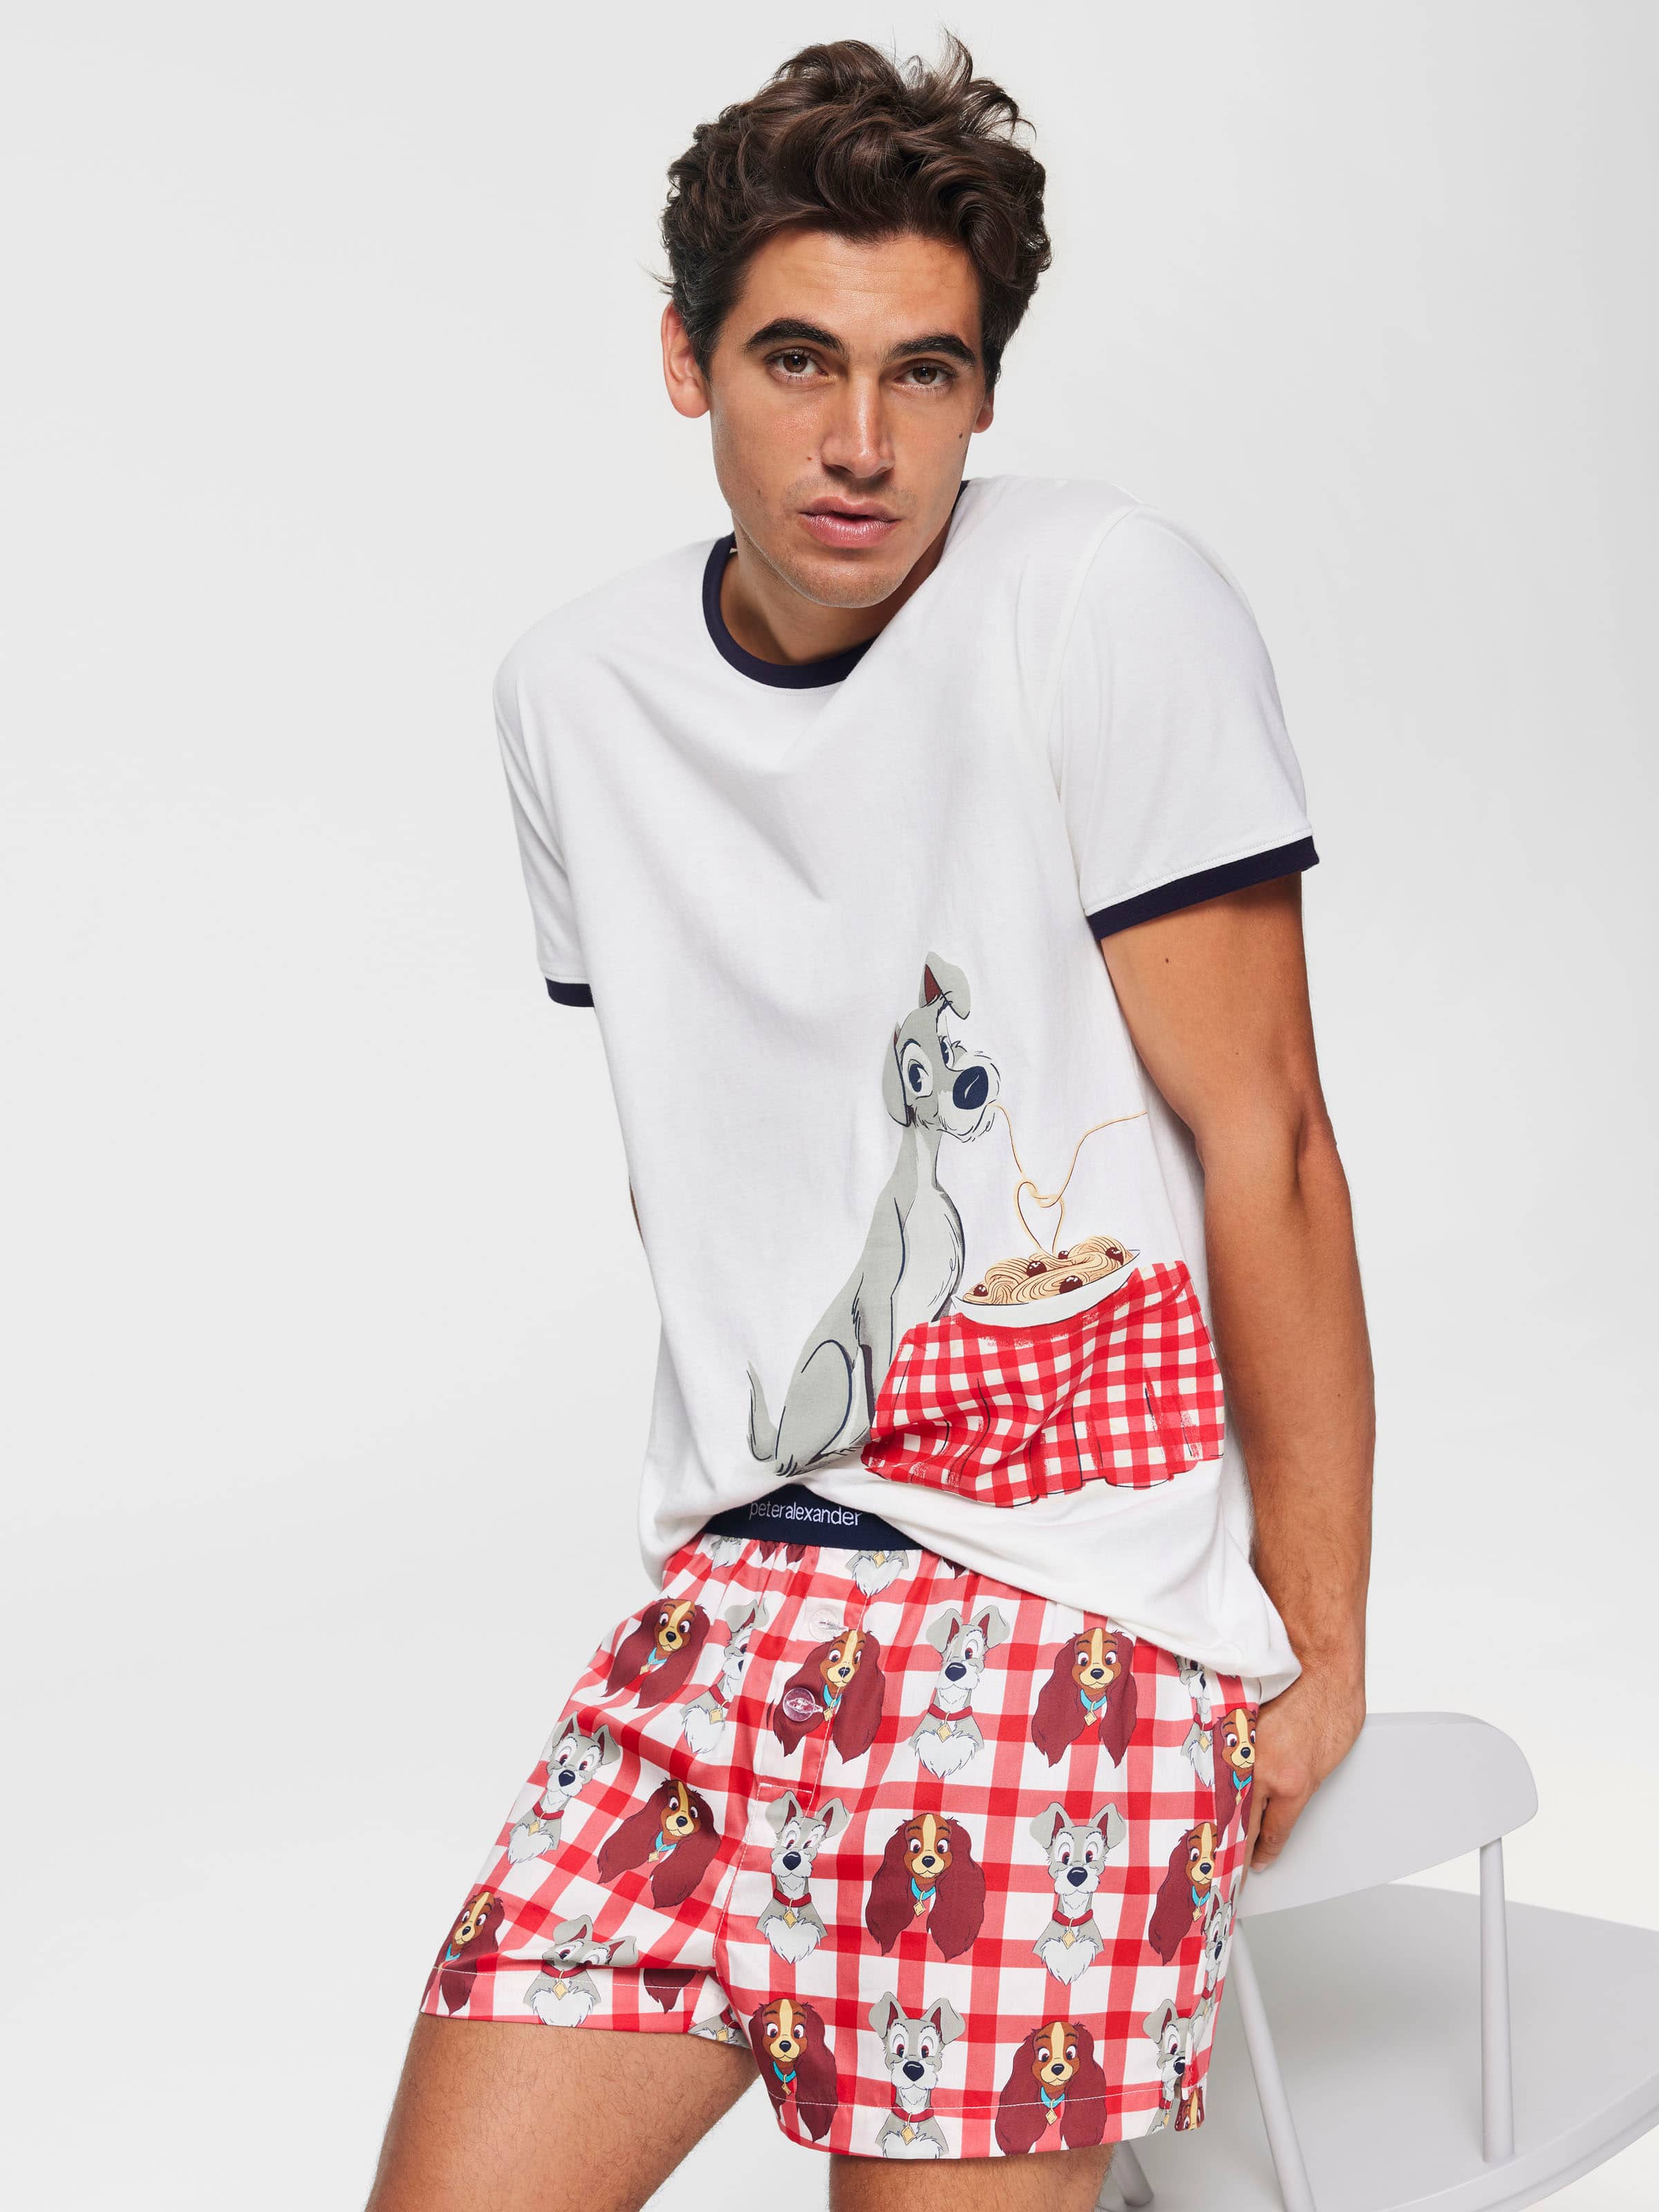 Mens Pajama Shorts with Pockets - Father's Day Idea